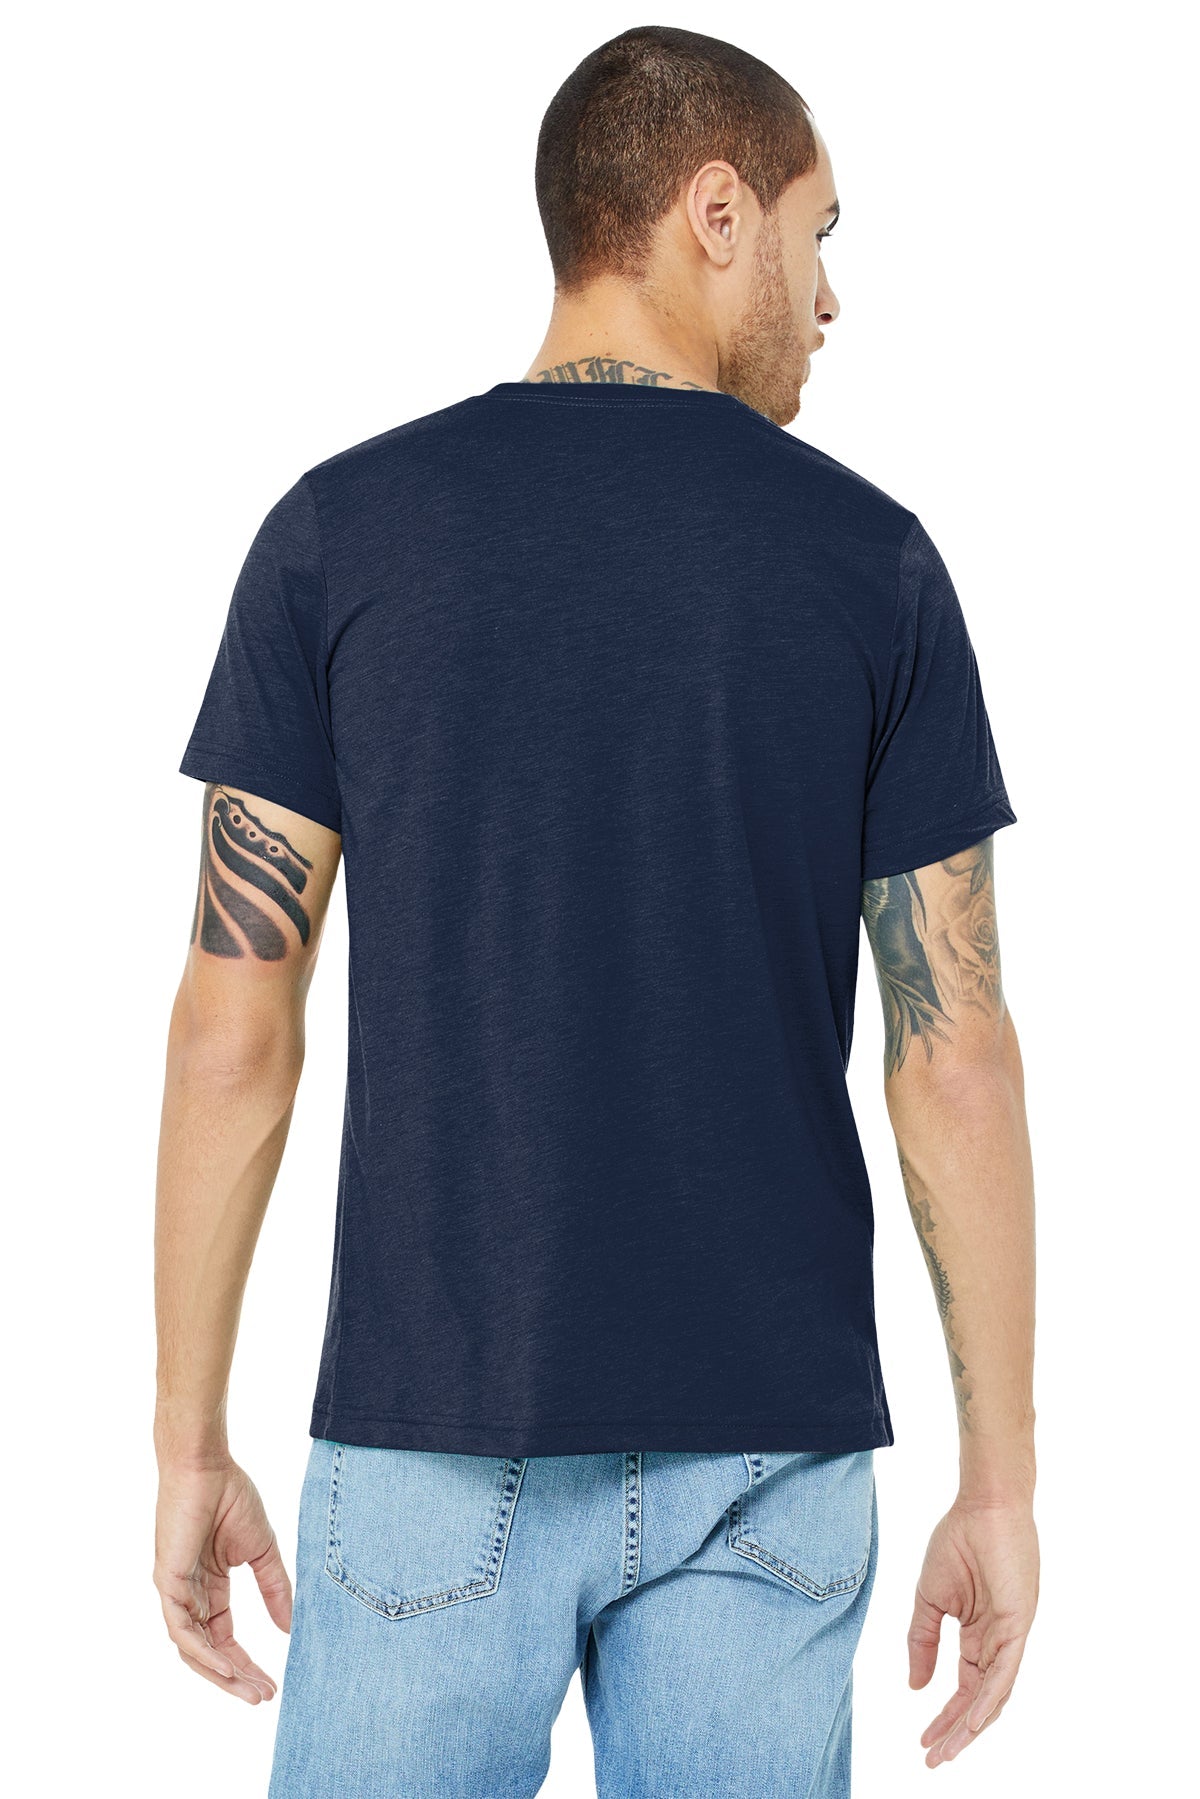 bella + canvas unisex triblend short sleeve t-shirt 3413c solid nvy trblnd